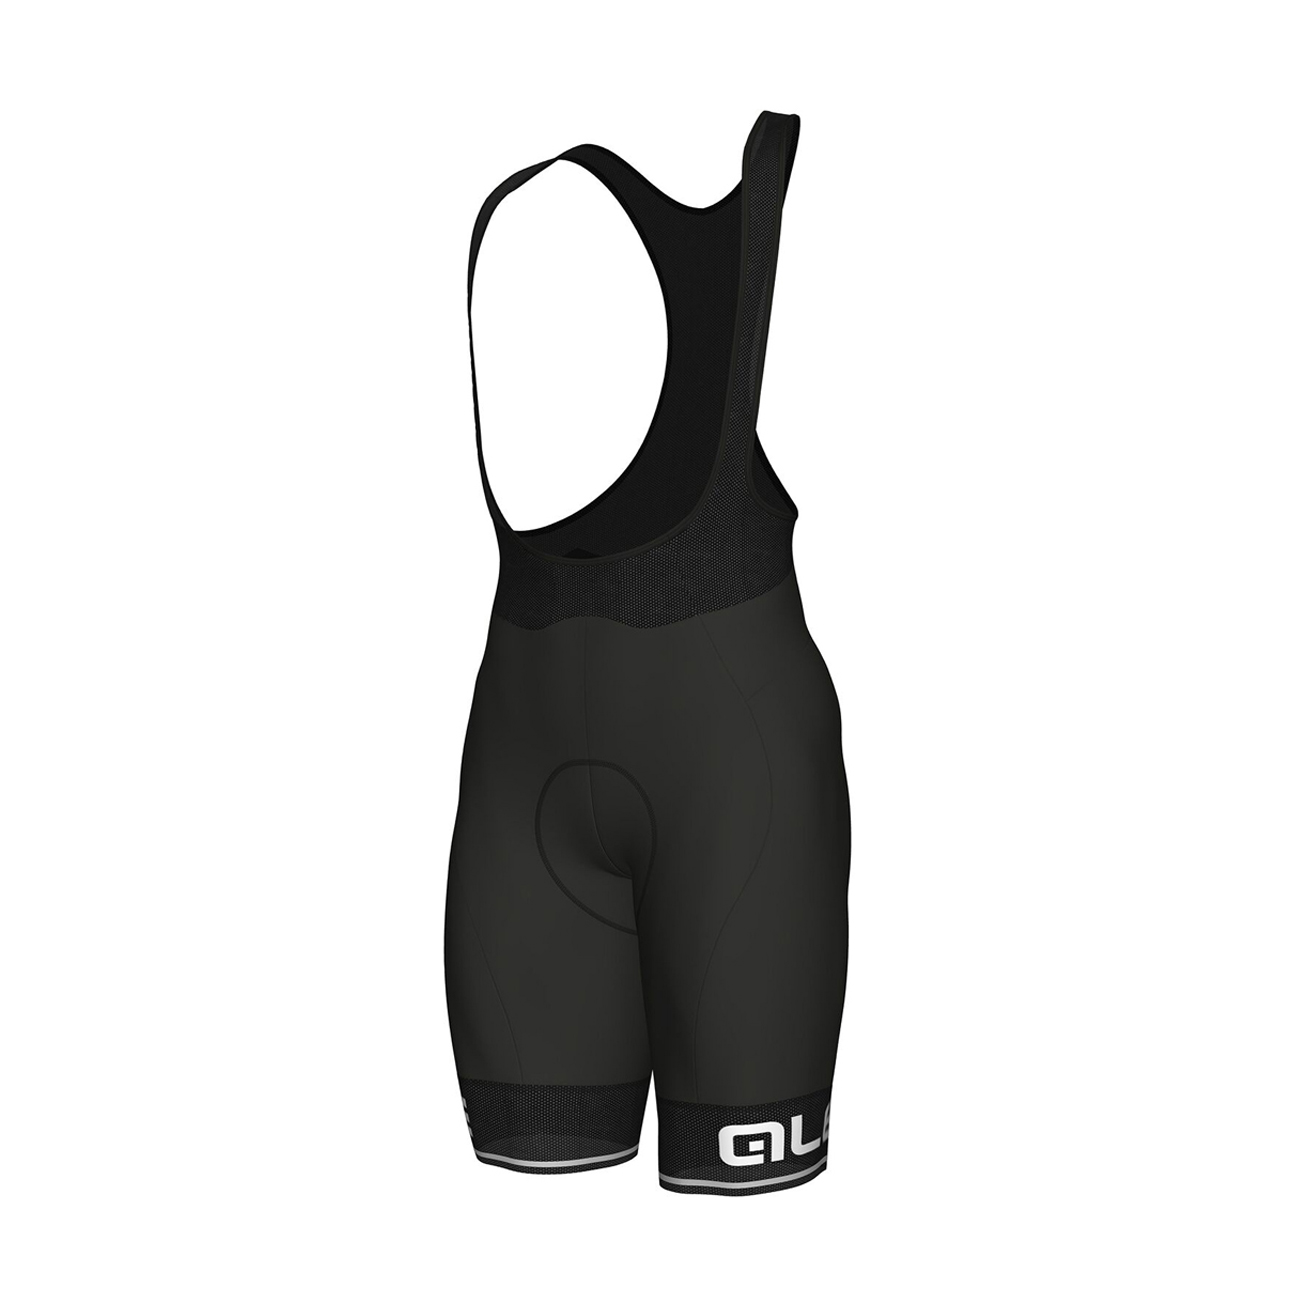 
                ALÉ Cyklistické kalhoty krátké s laclem - CORSA - černá/bílá XL
            